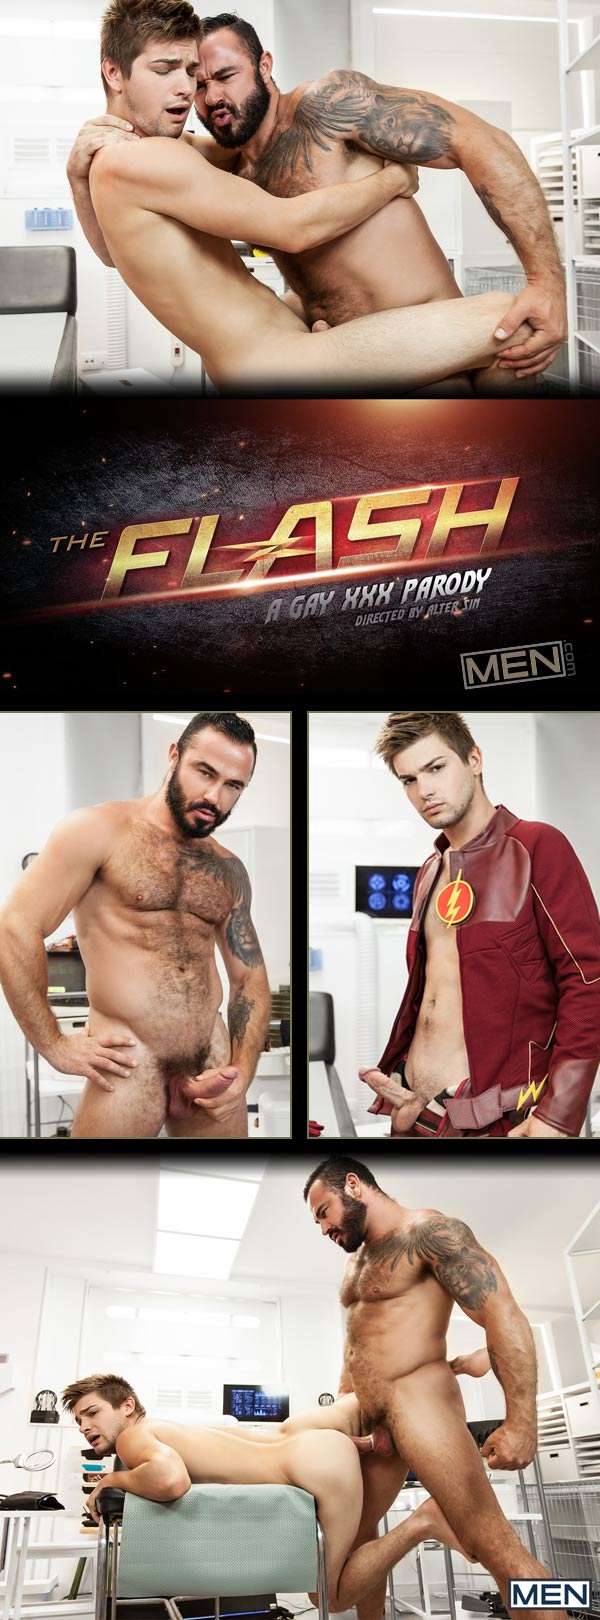 The Flash: A Gay XXX Parody (Jessy Ares Fucks Johnny Rapid) (Part 3) at Men.com